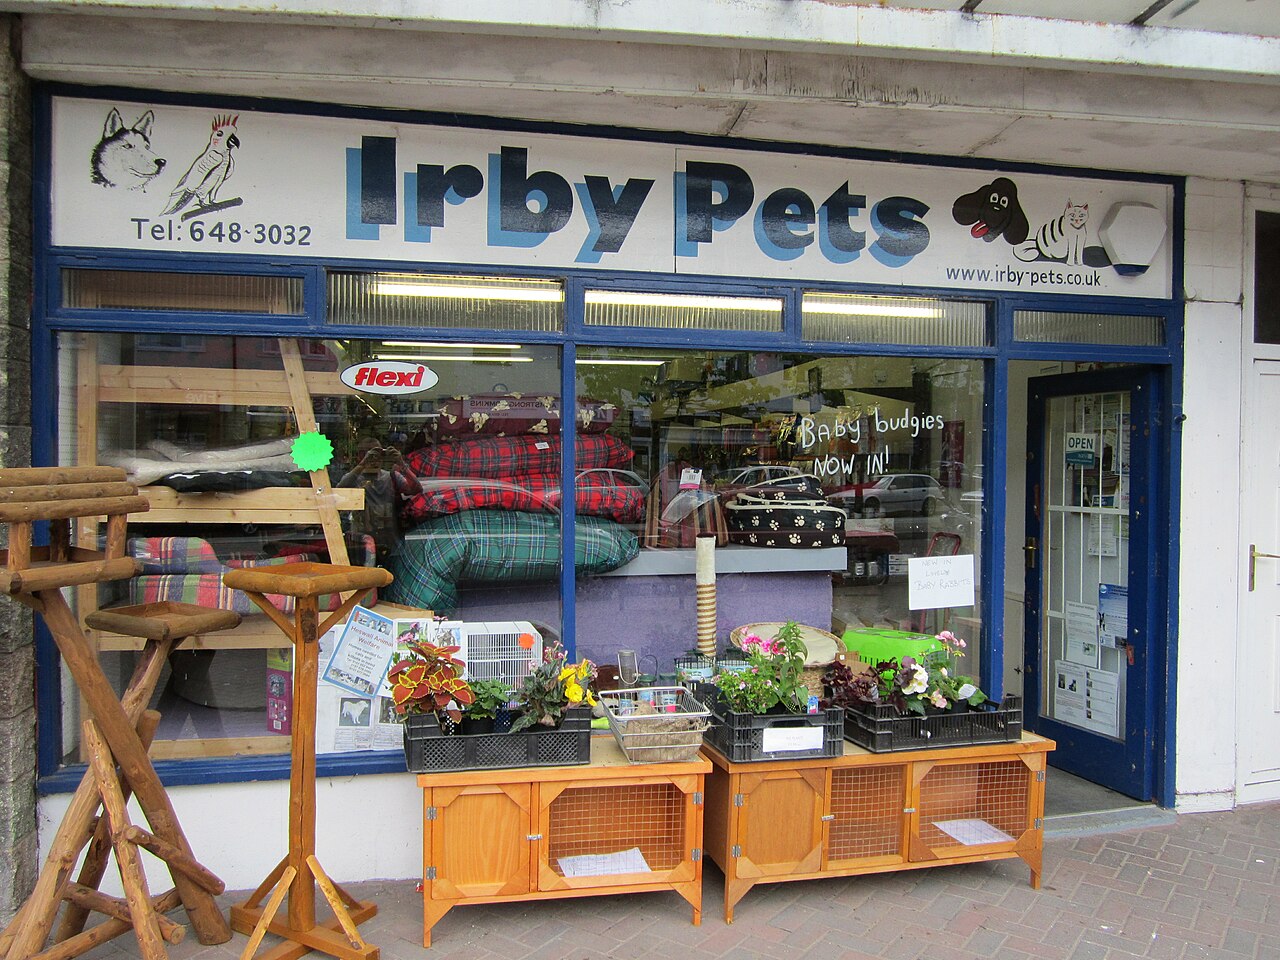 File:Pet shop, Irby - IMG 0882.JPG - Wikimedia Commons